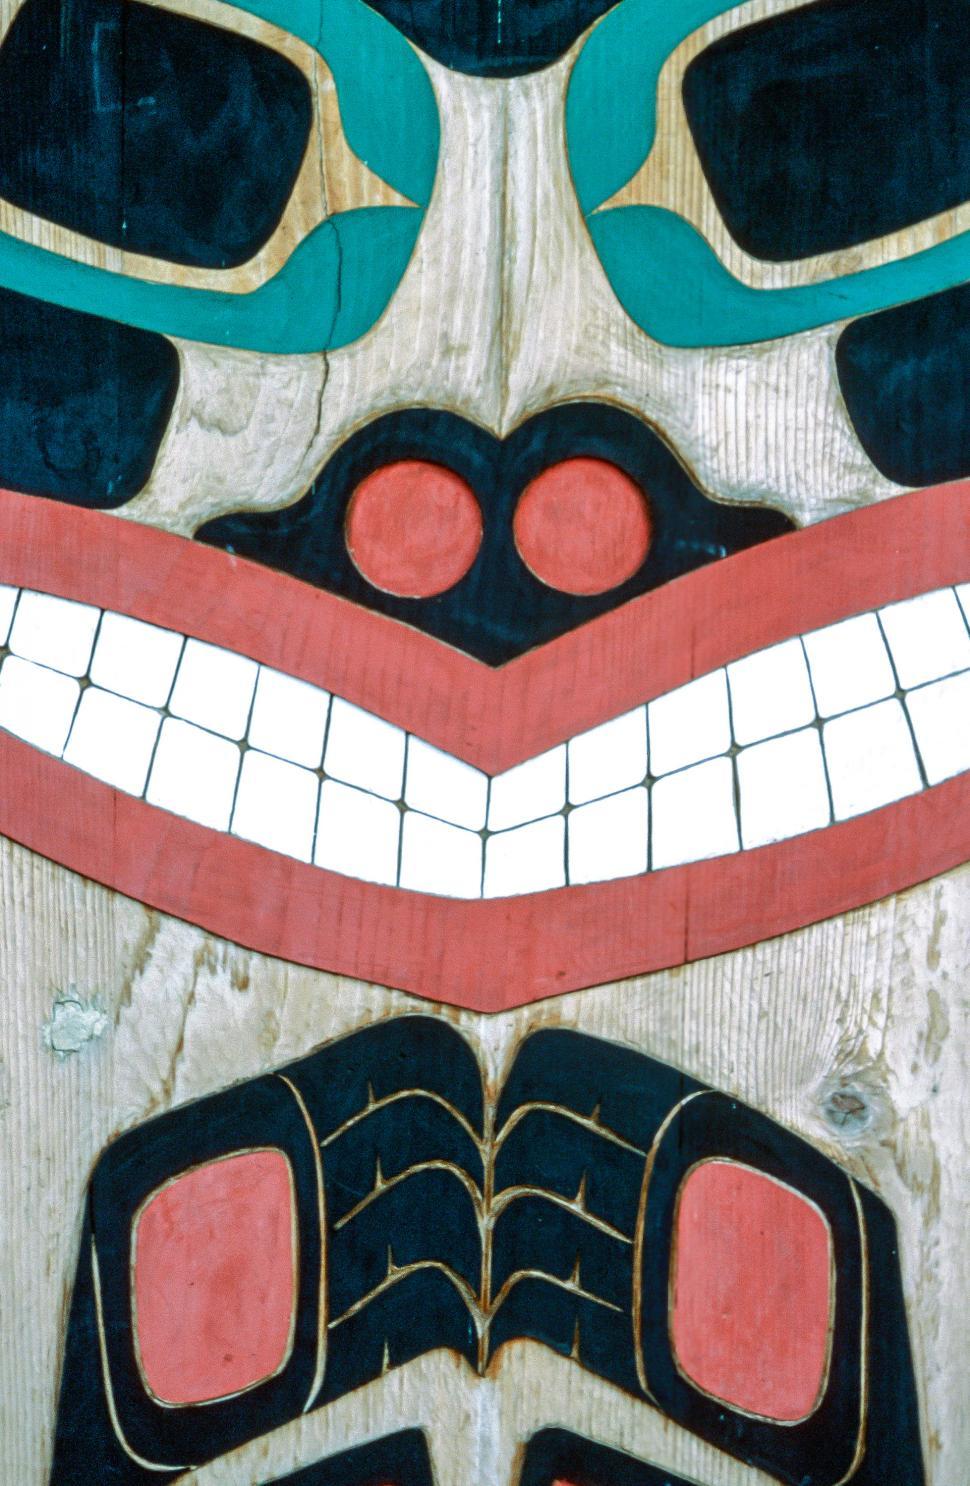 Free Image of Totem face 